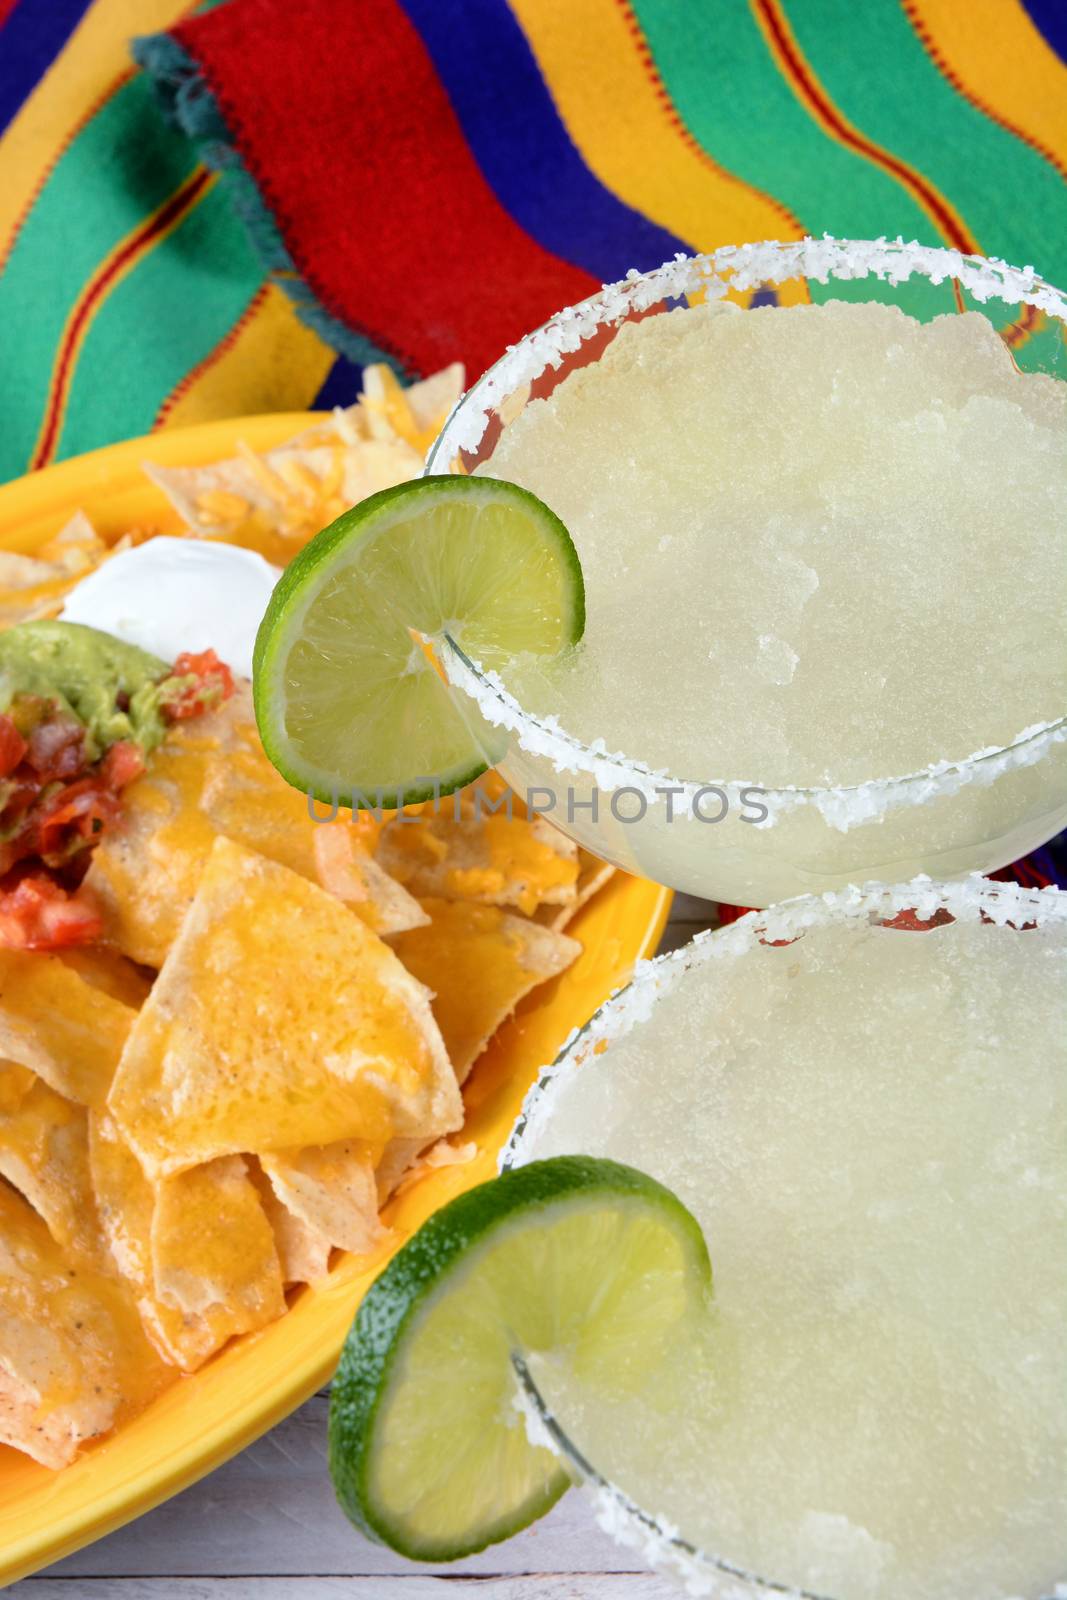 Cinco de Mayo Concept: Margaritas and Mexican food on a colorful by sCukrov